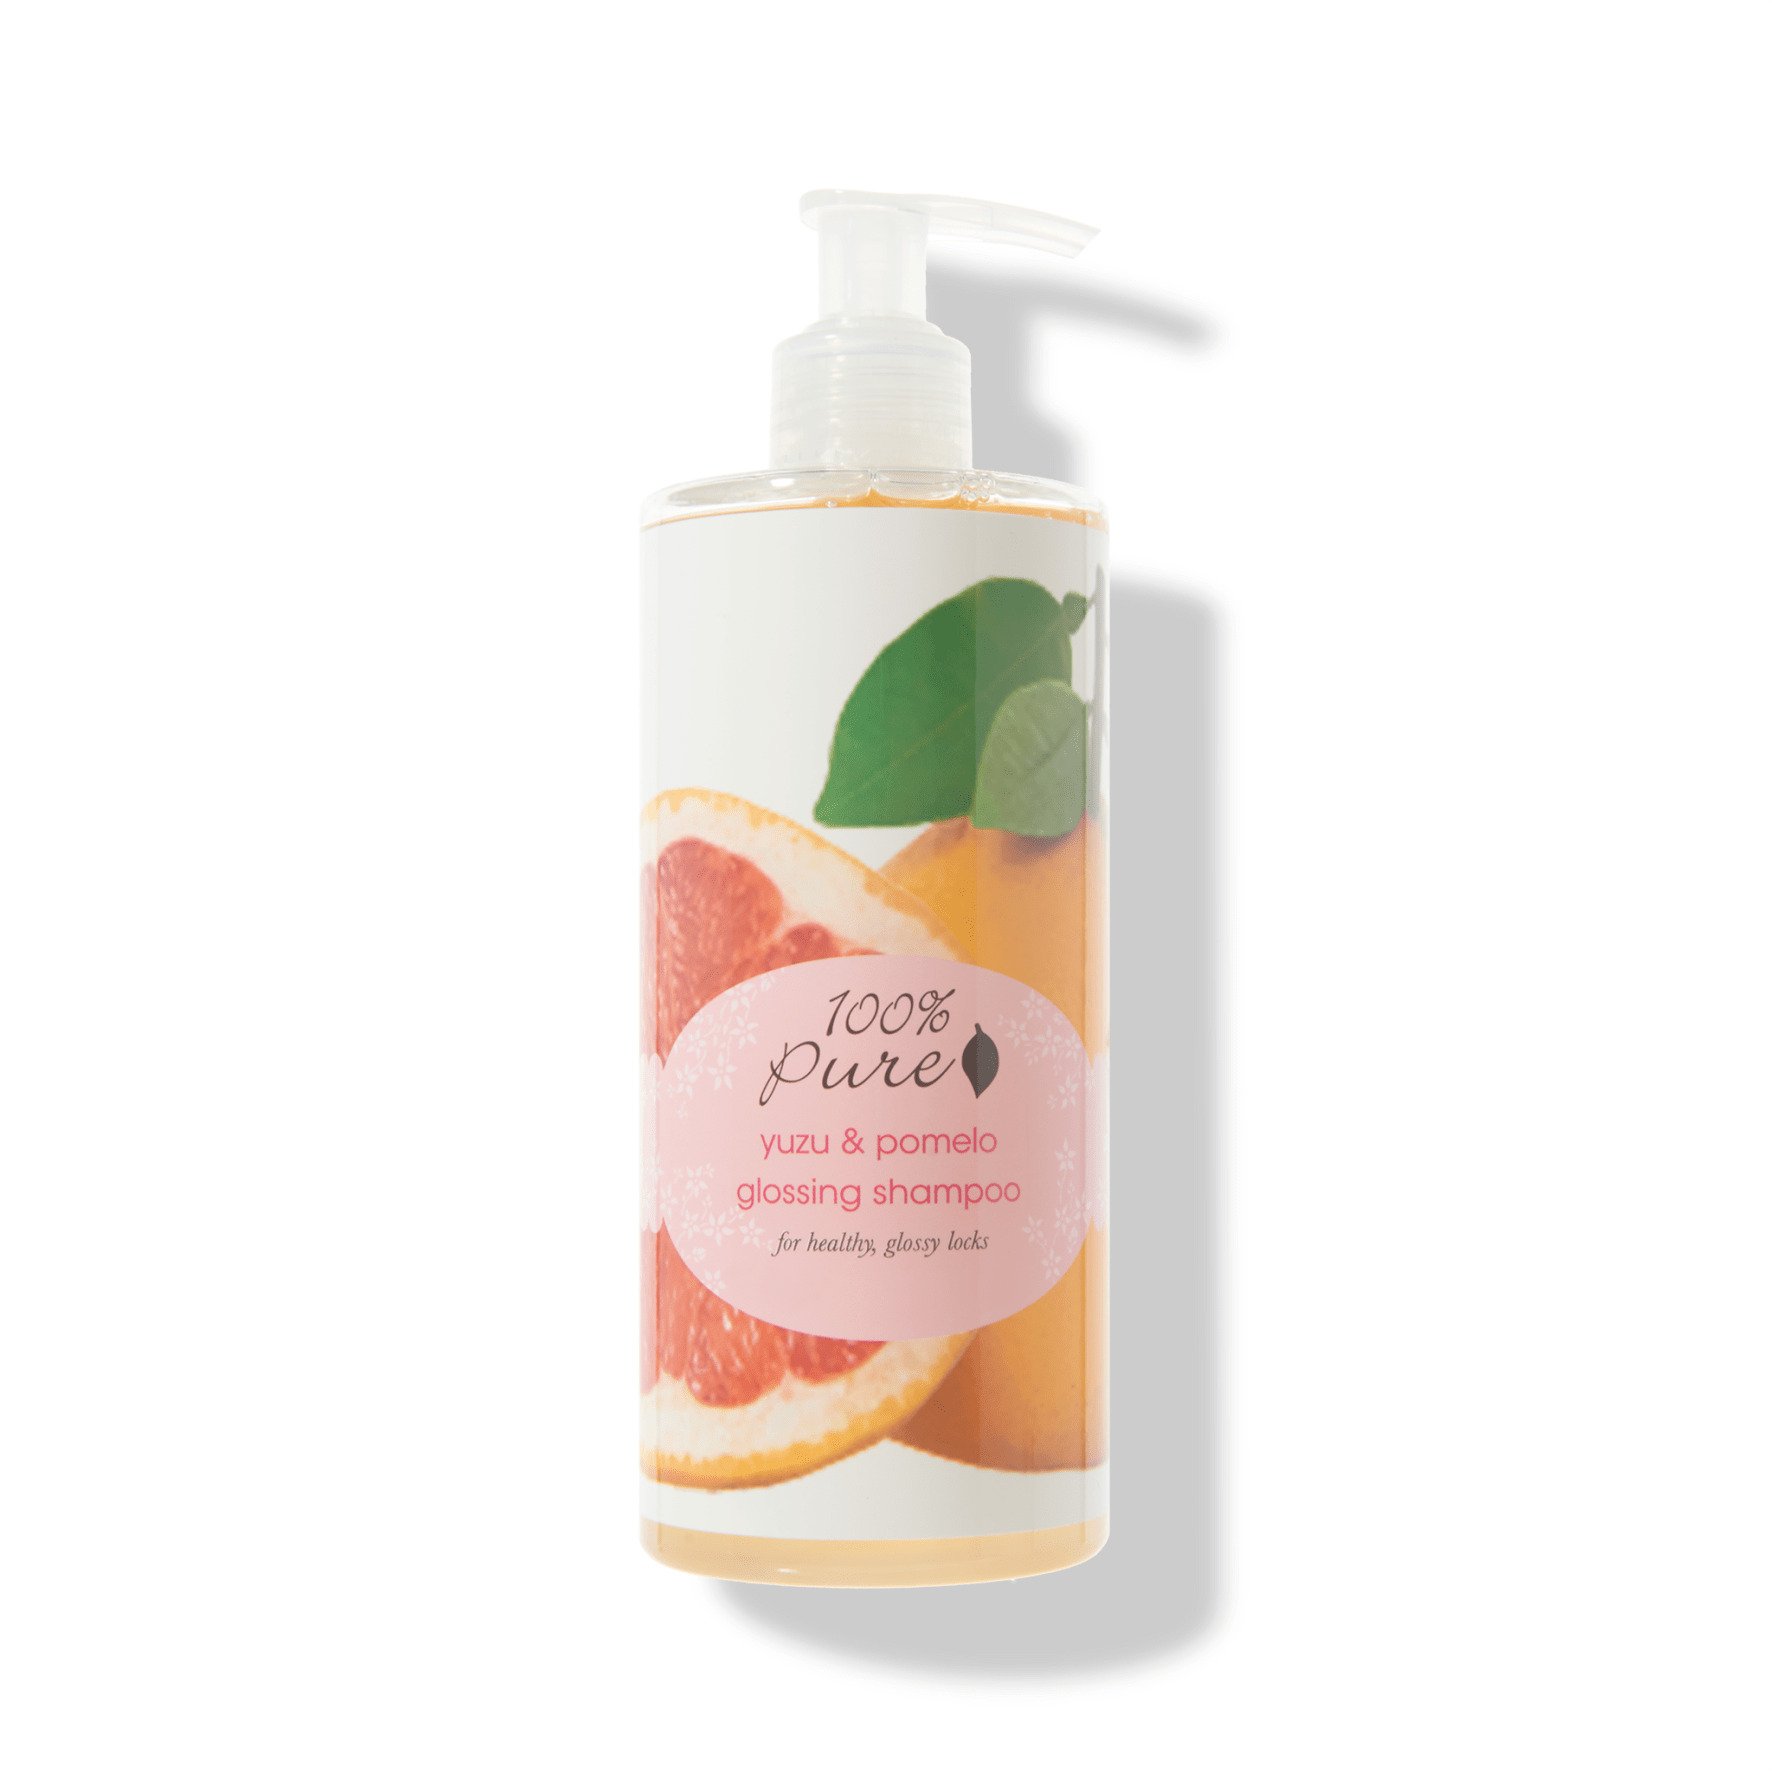 Yuzu & Pomelo Glossing Shampoo from 100% Pure